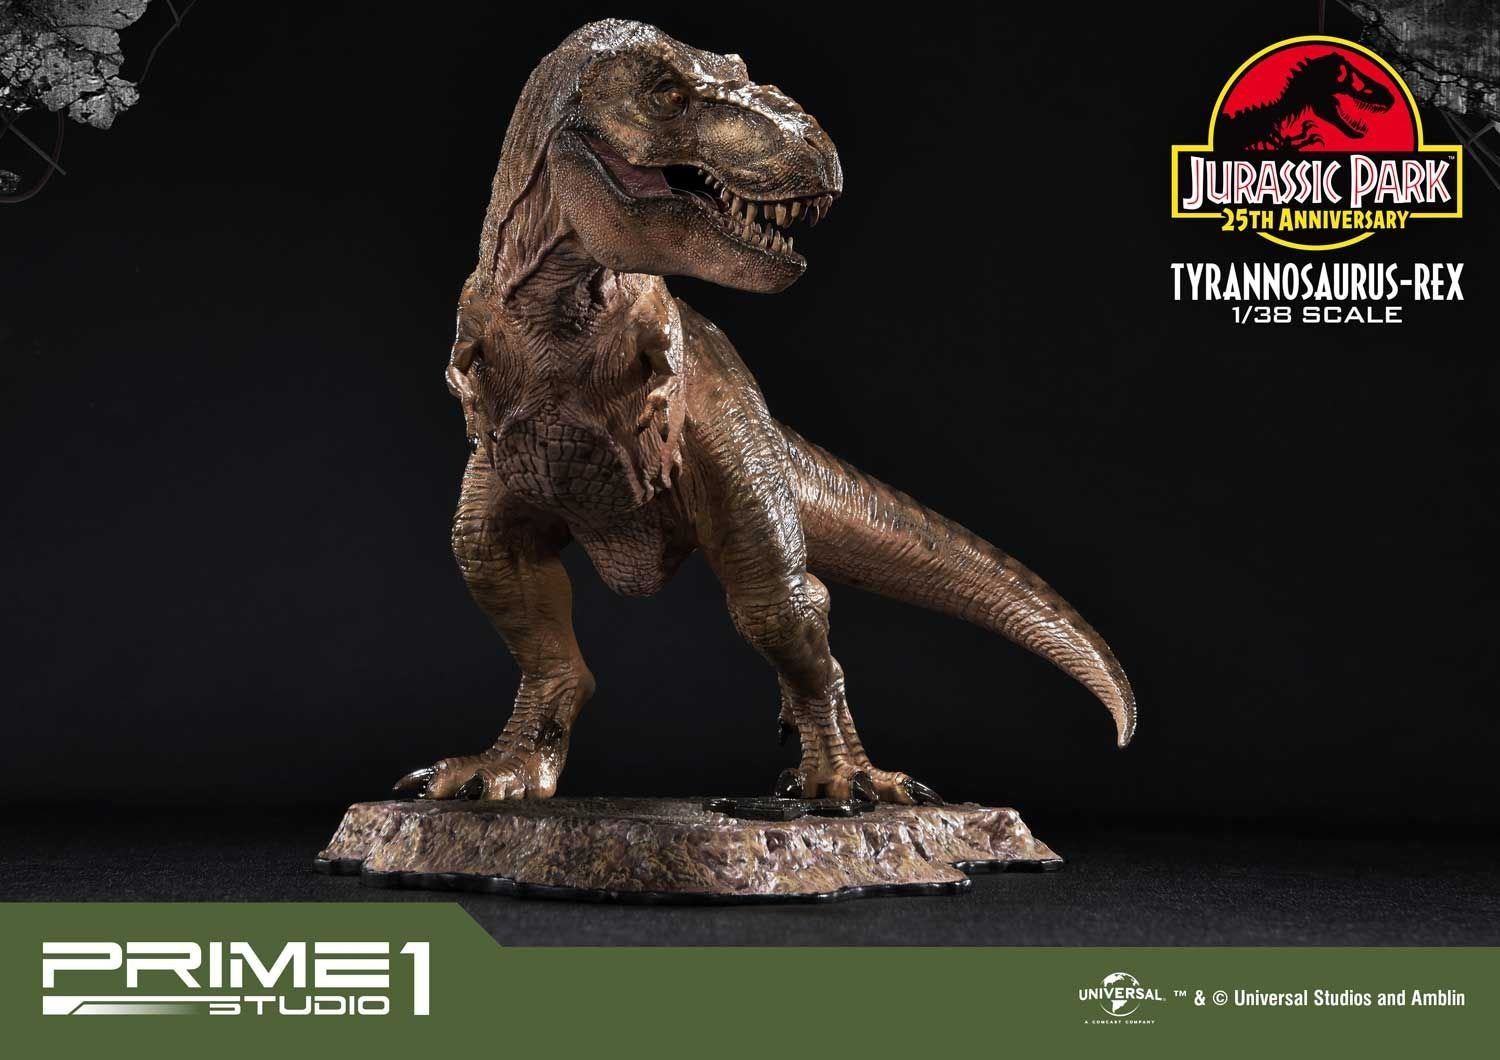 Prime Collectible Figures Jurassic Park (Film) Tyrannosaurus-Rex